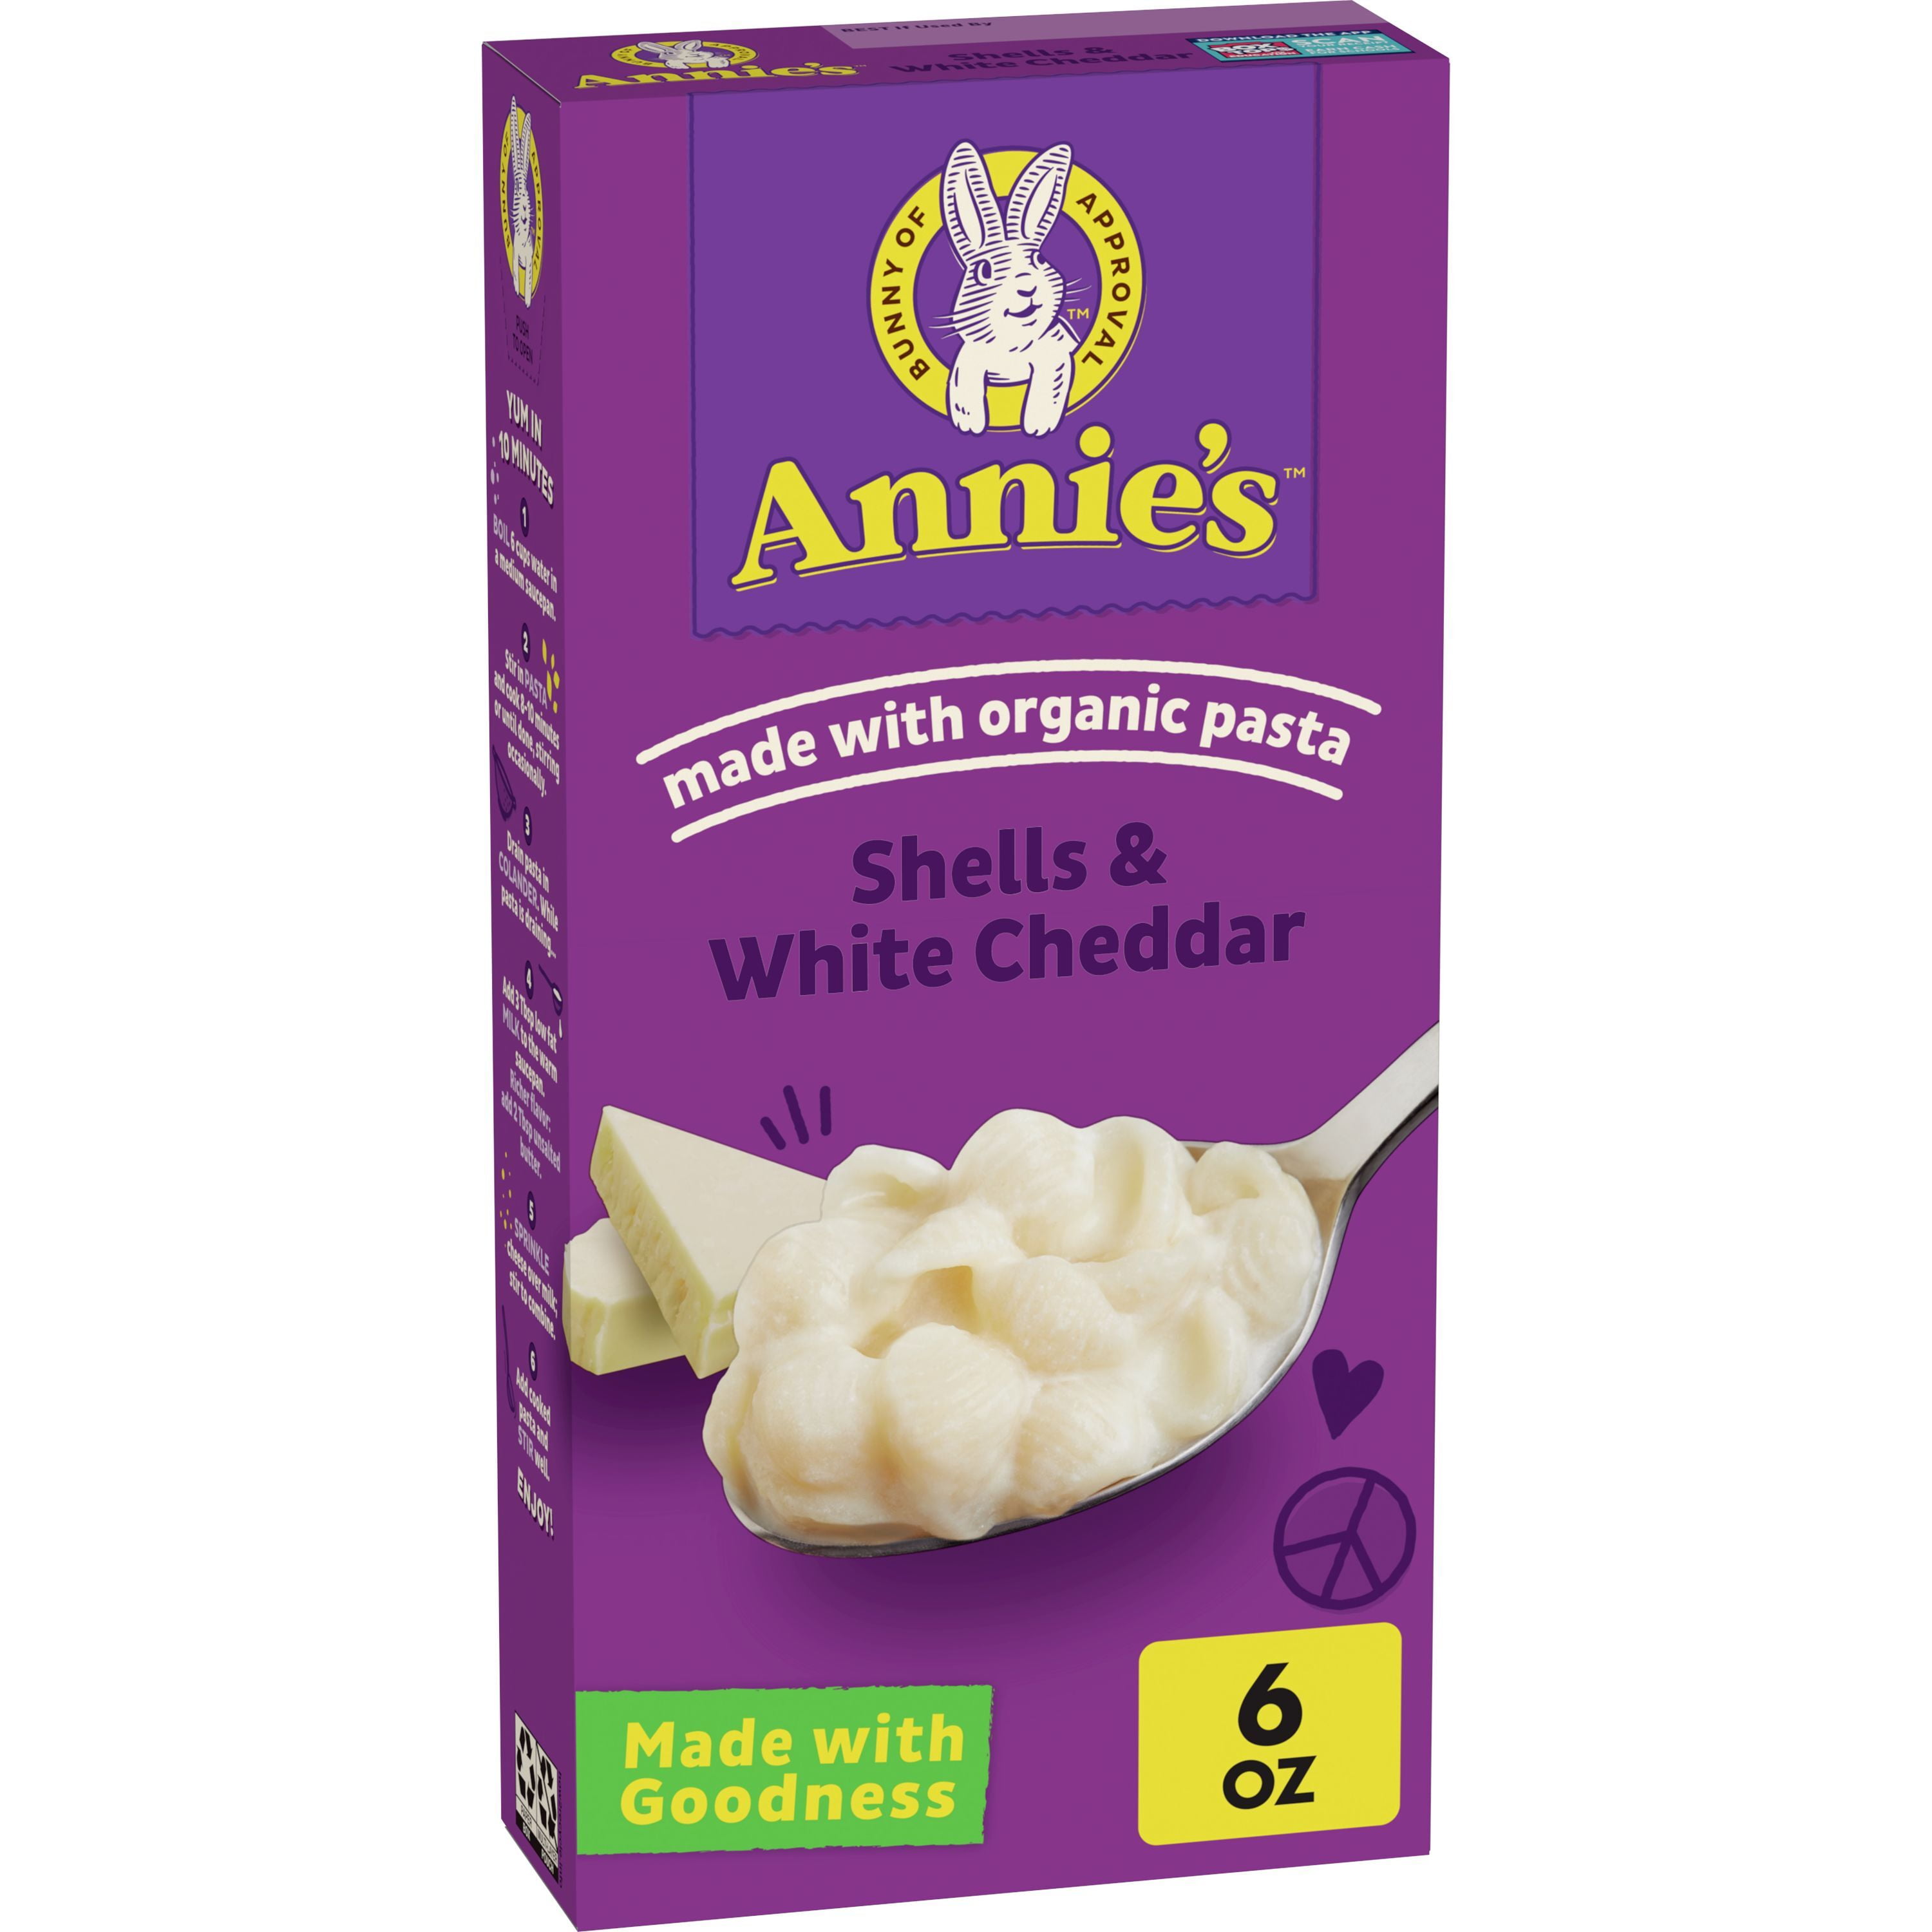 Annieâ€™s White Cheddar Shells Macaroni & Cheese Dinner with Organic Pasta,  6 OZ